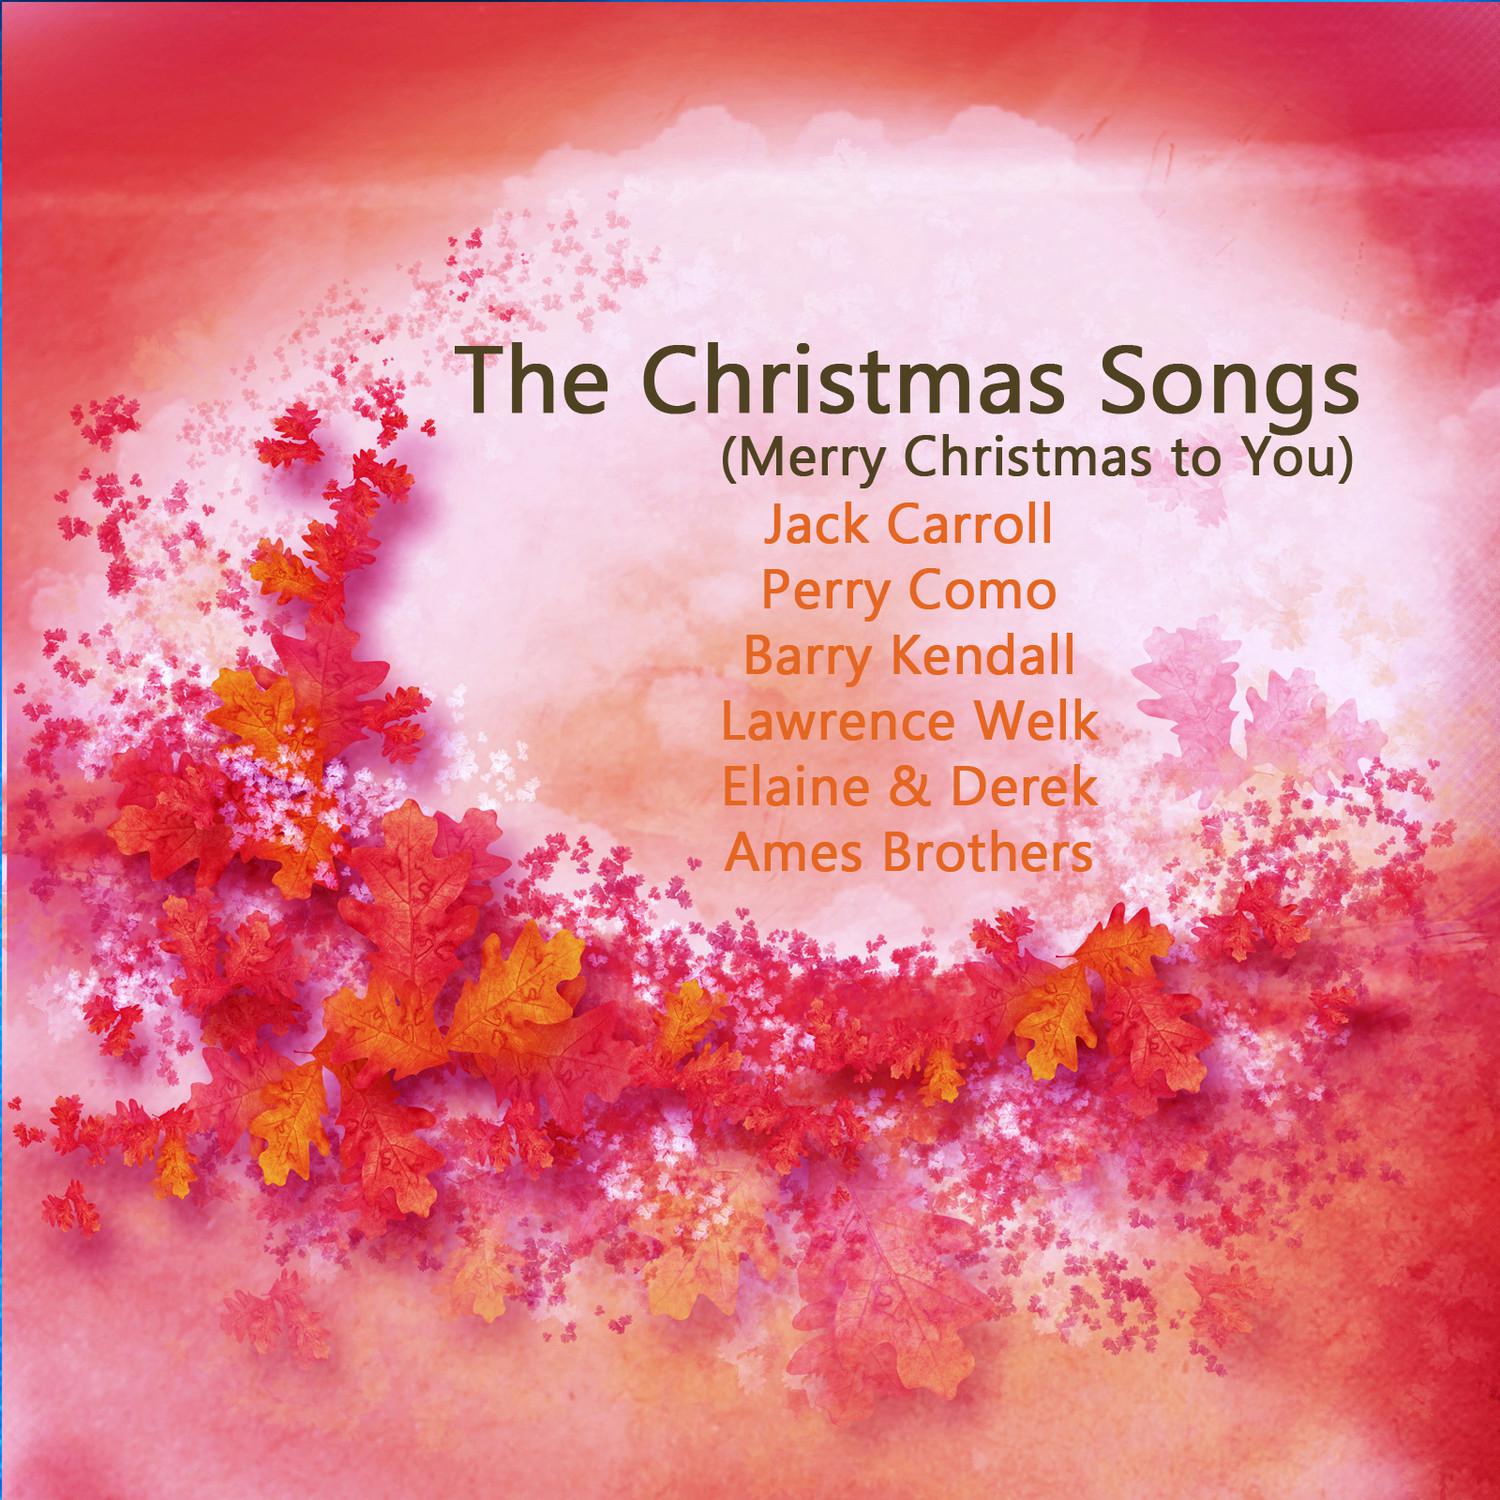 The Christmas Songs (Merry Christmas to You)